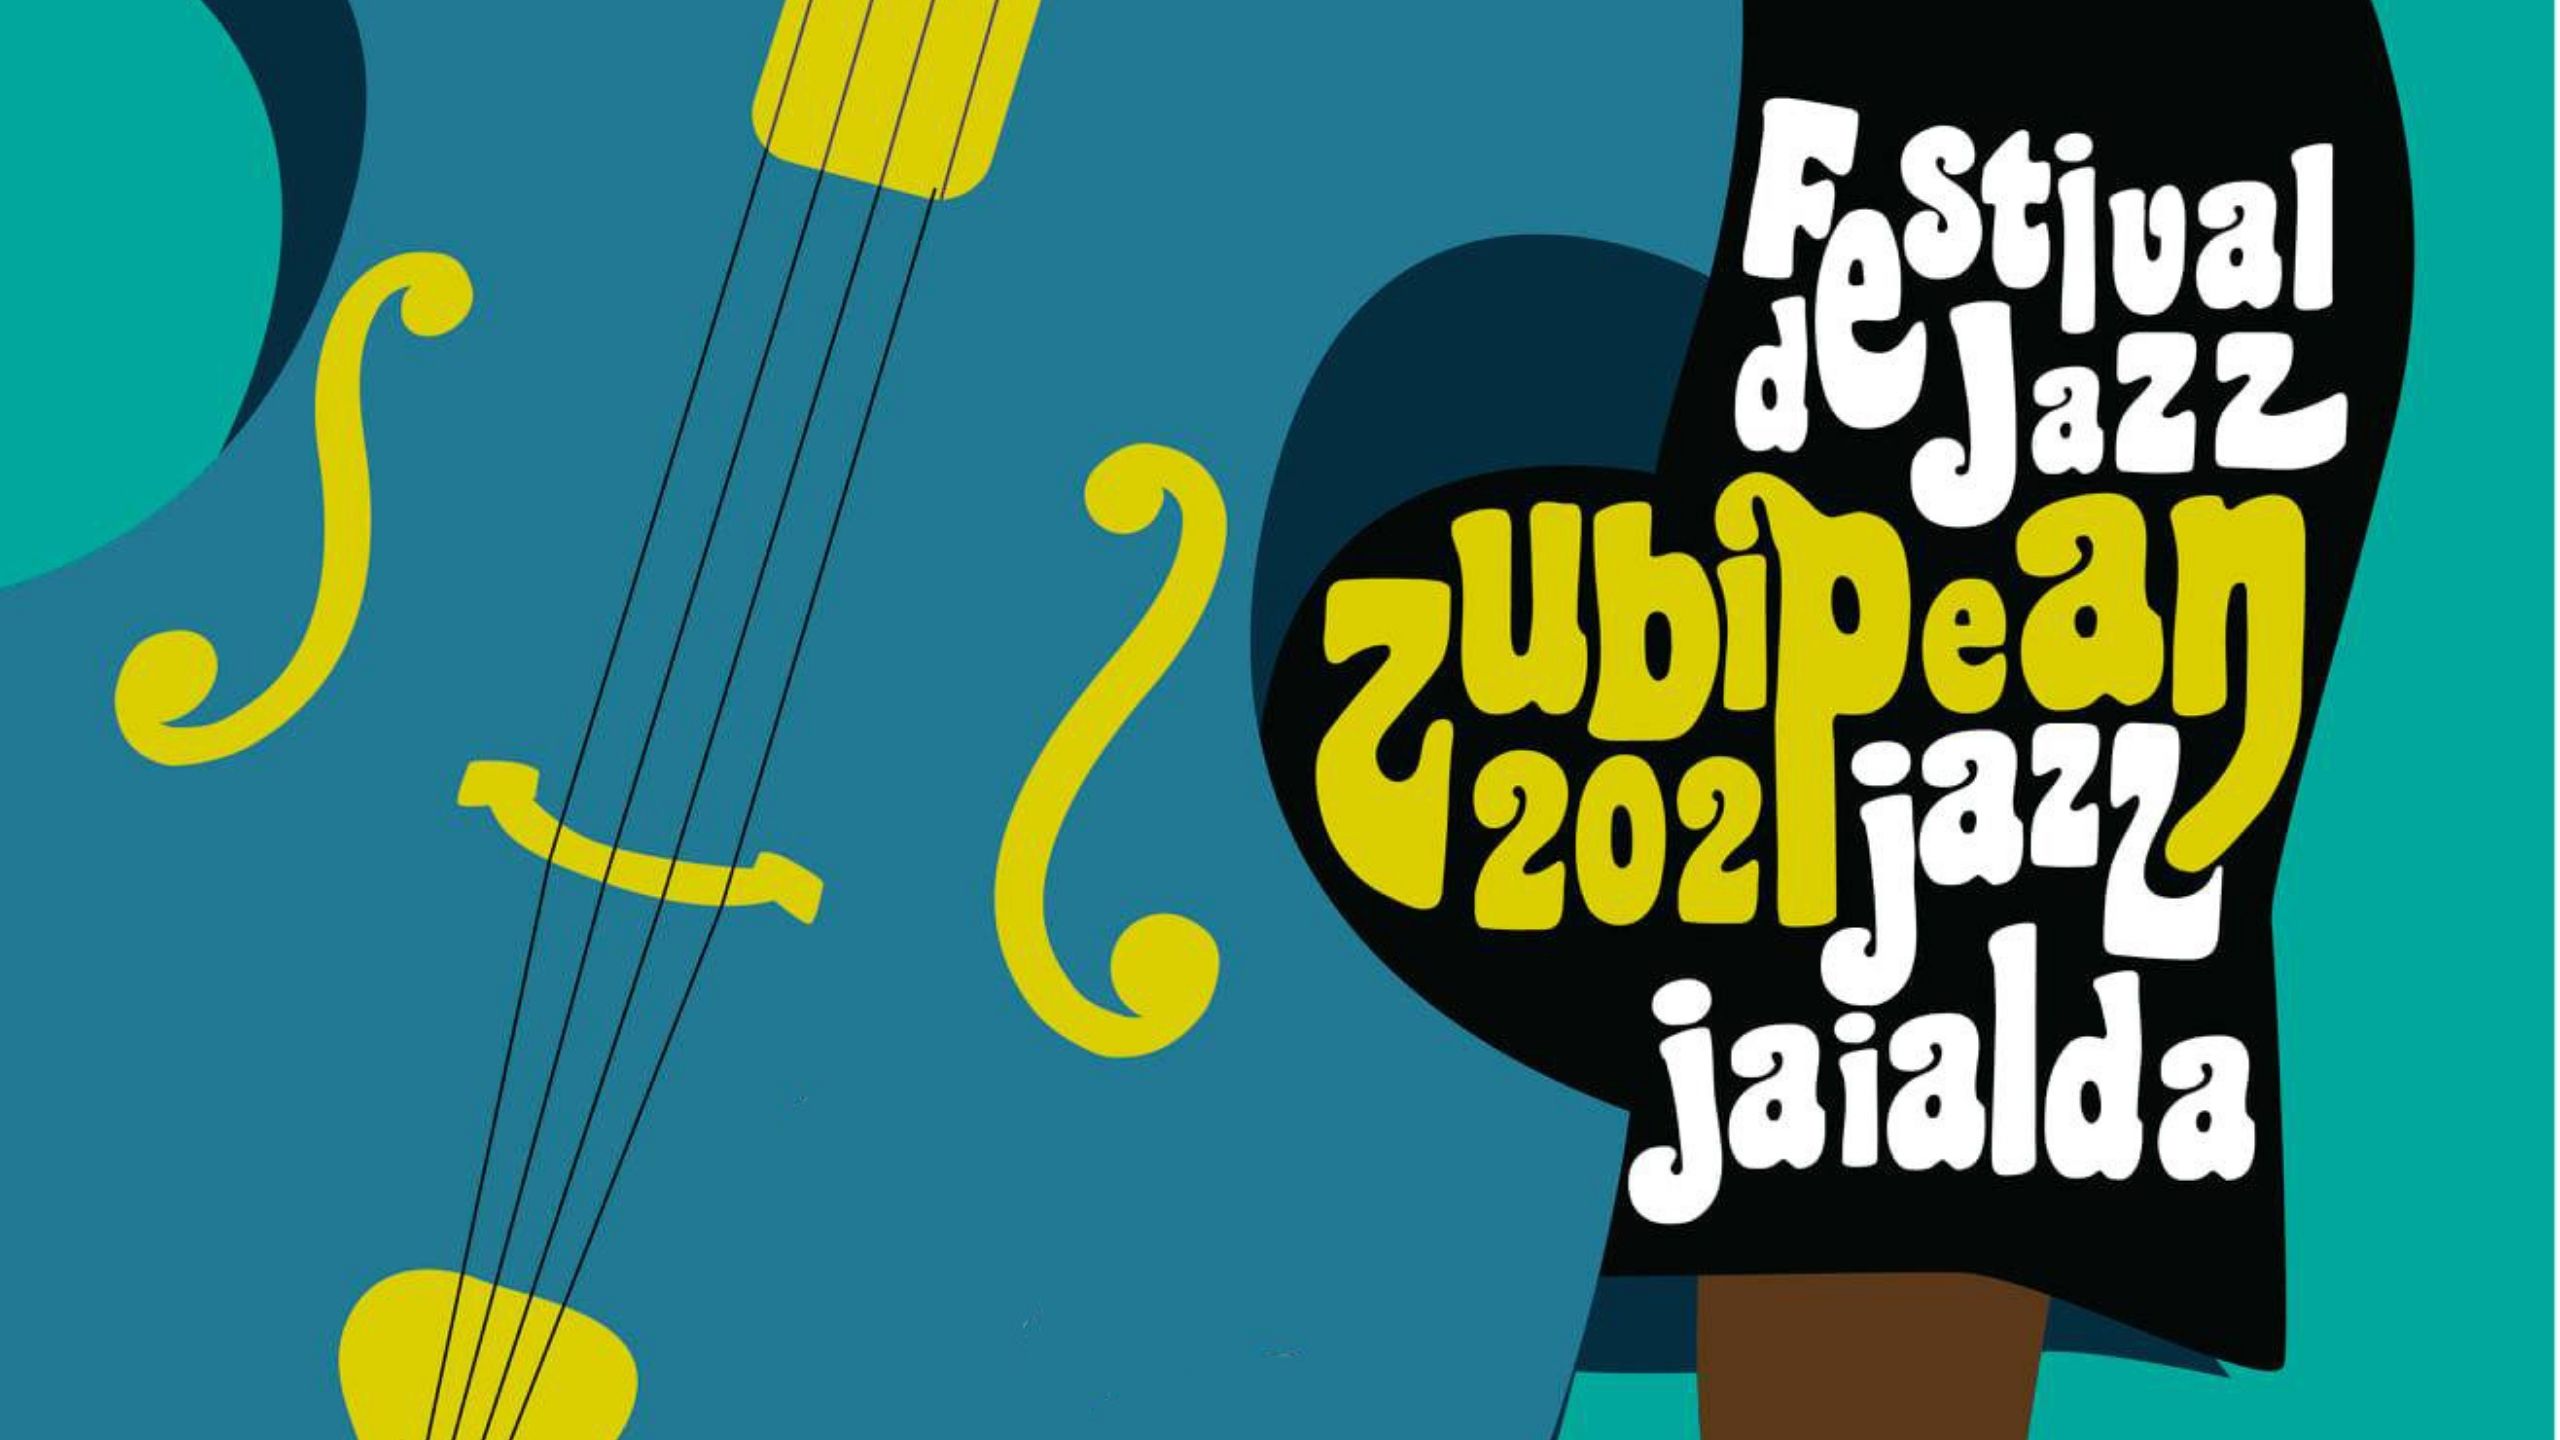 Festival de Jazz Zubipean